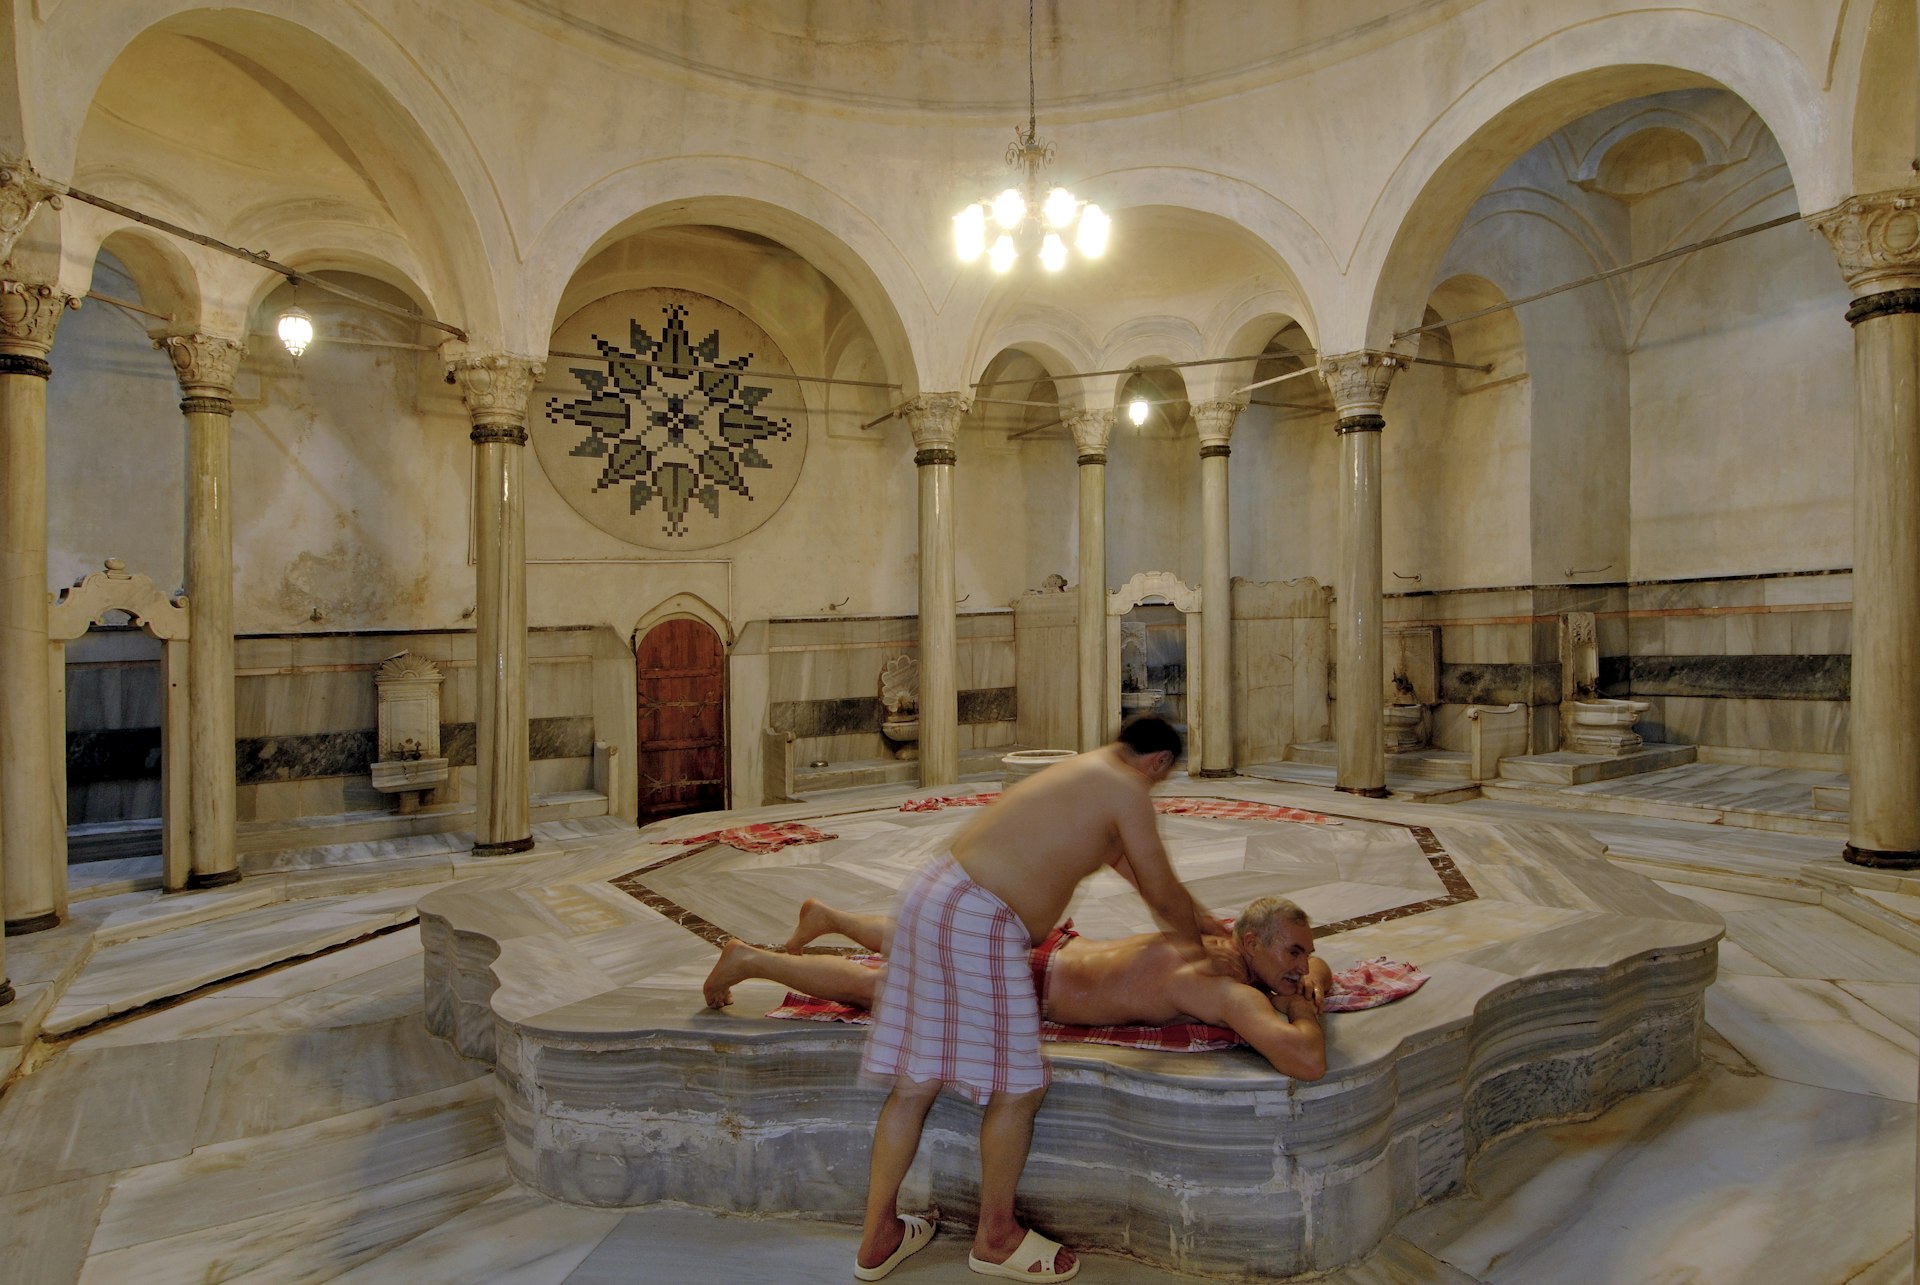 A customer getting a massage at the Hammam (Turkish baths), Istanbul